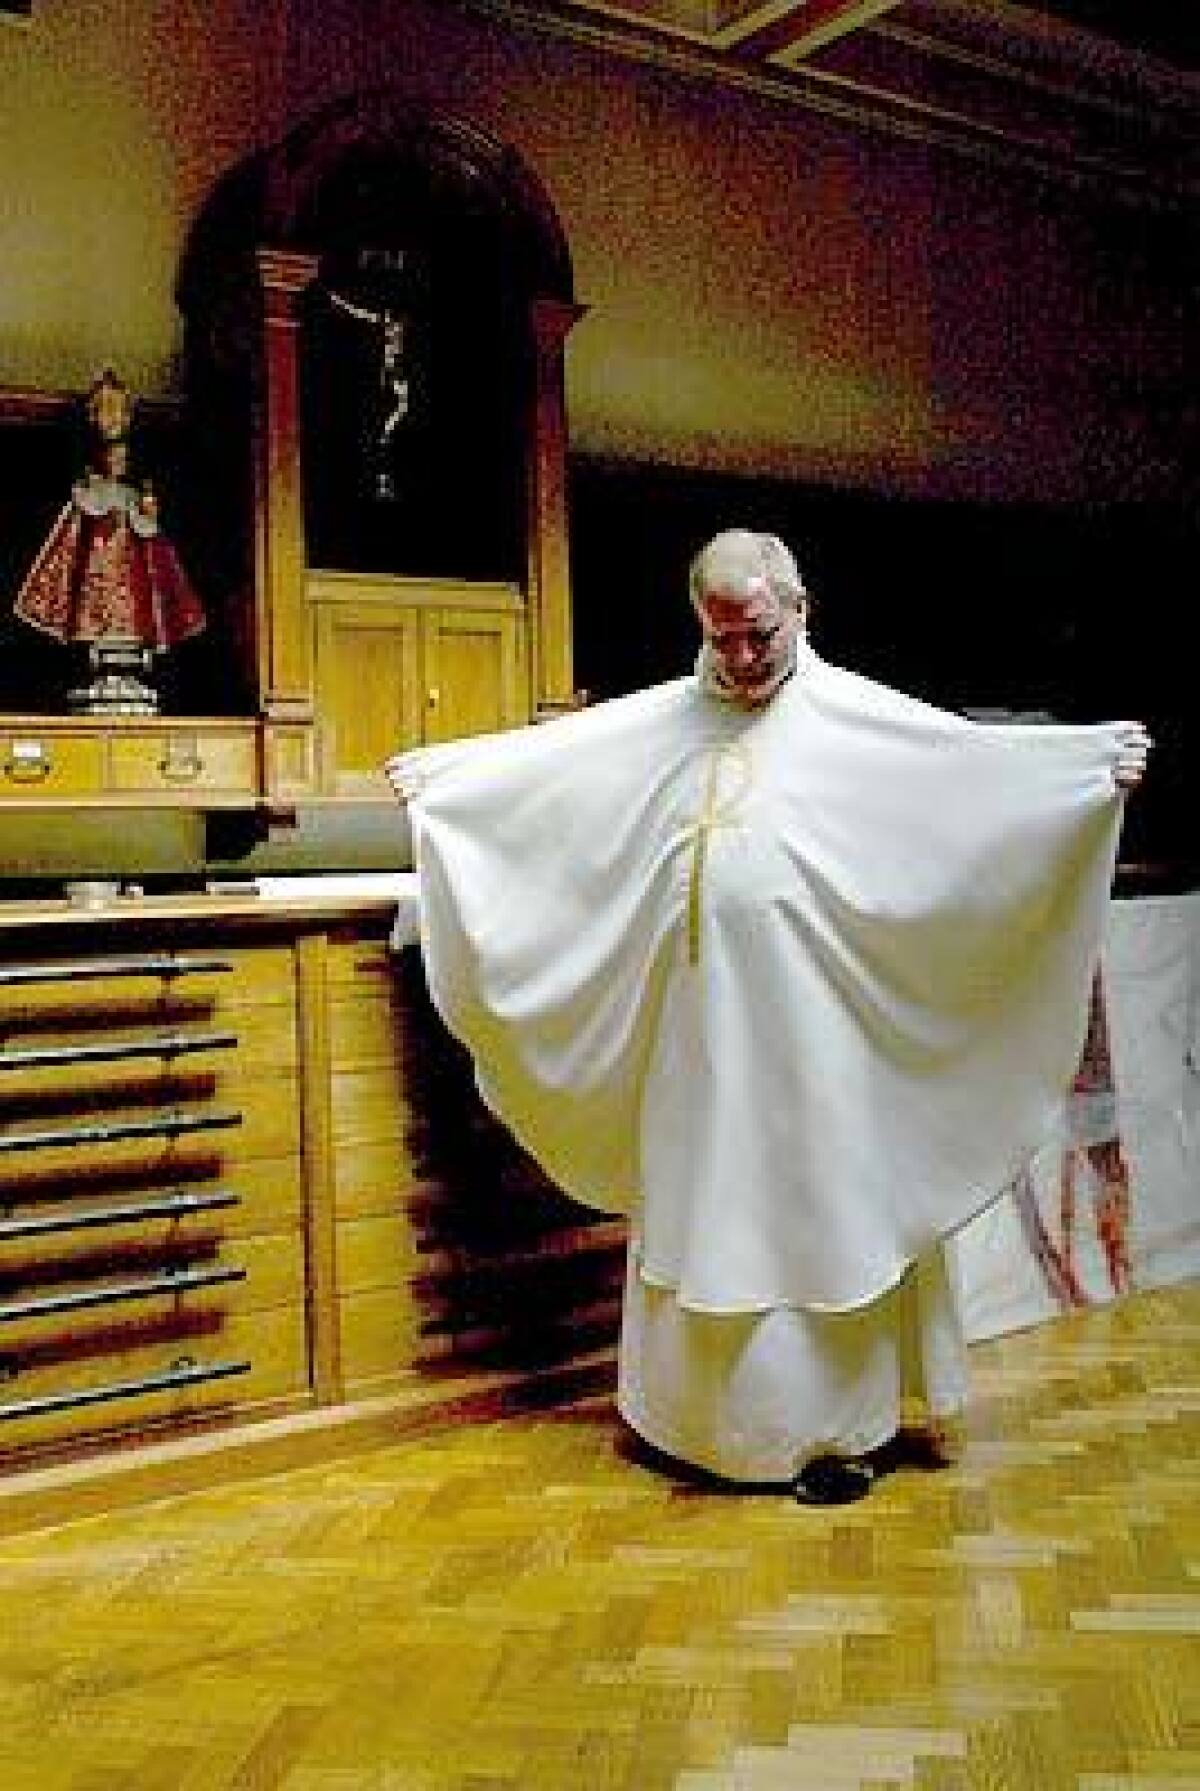 GETTING CENTERED: Father John Noonan prepares for a service at St. Teresa of Avila Church in Dublin.